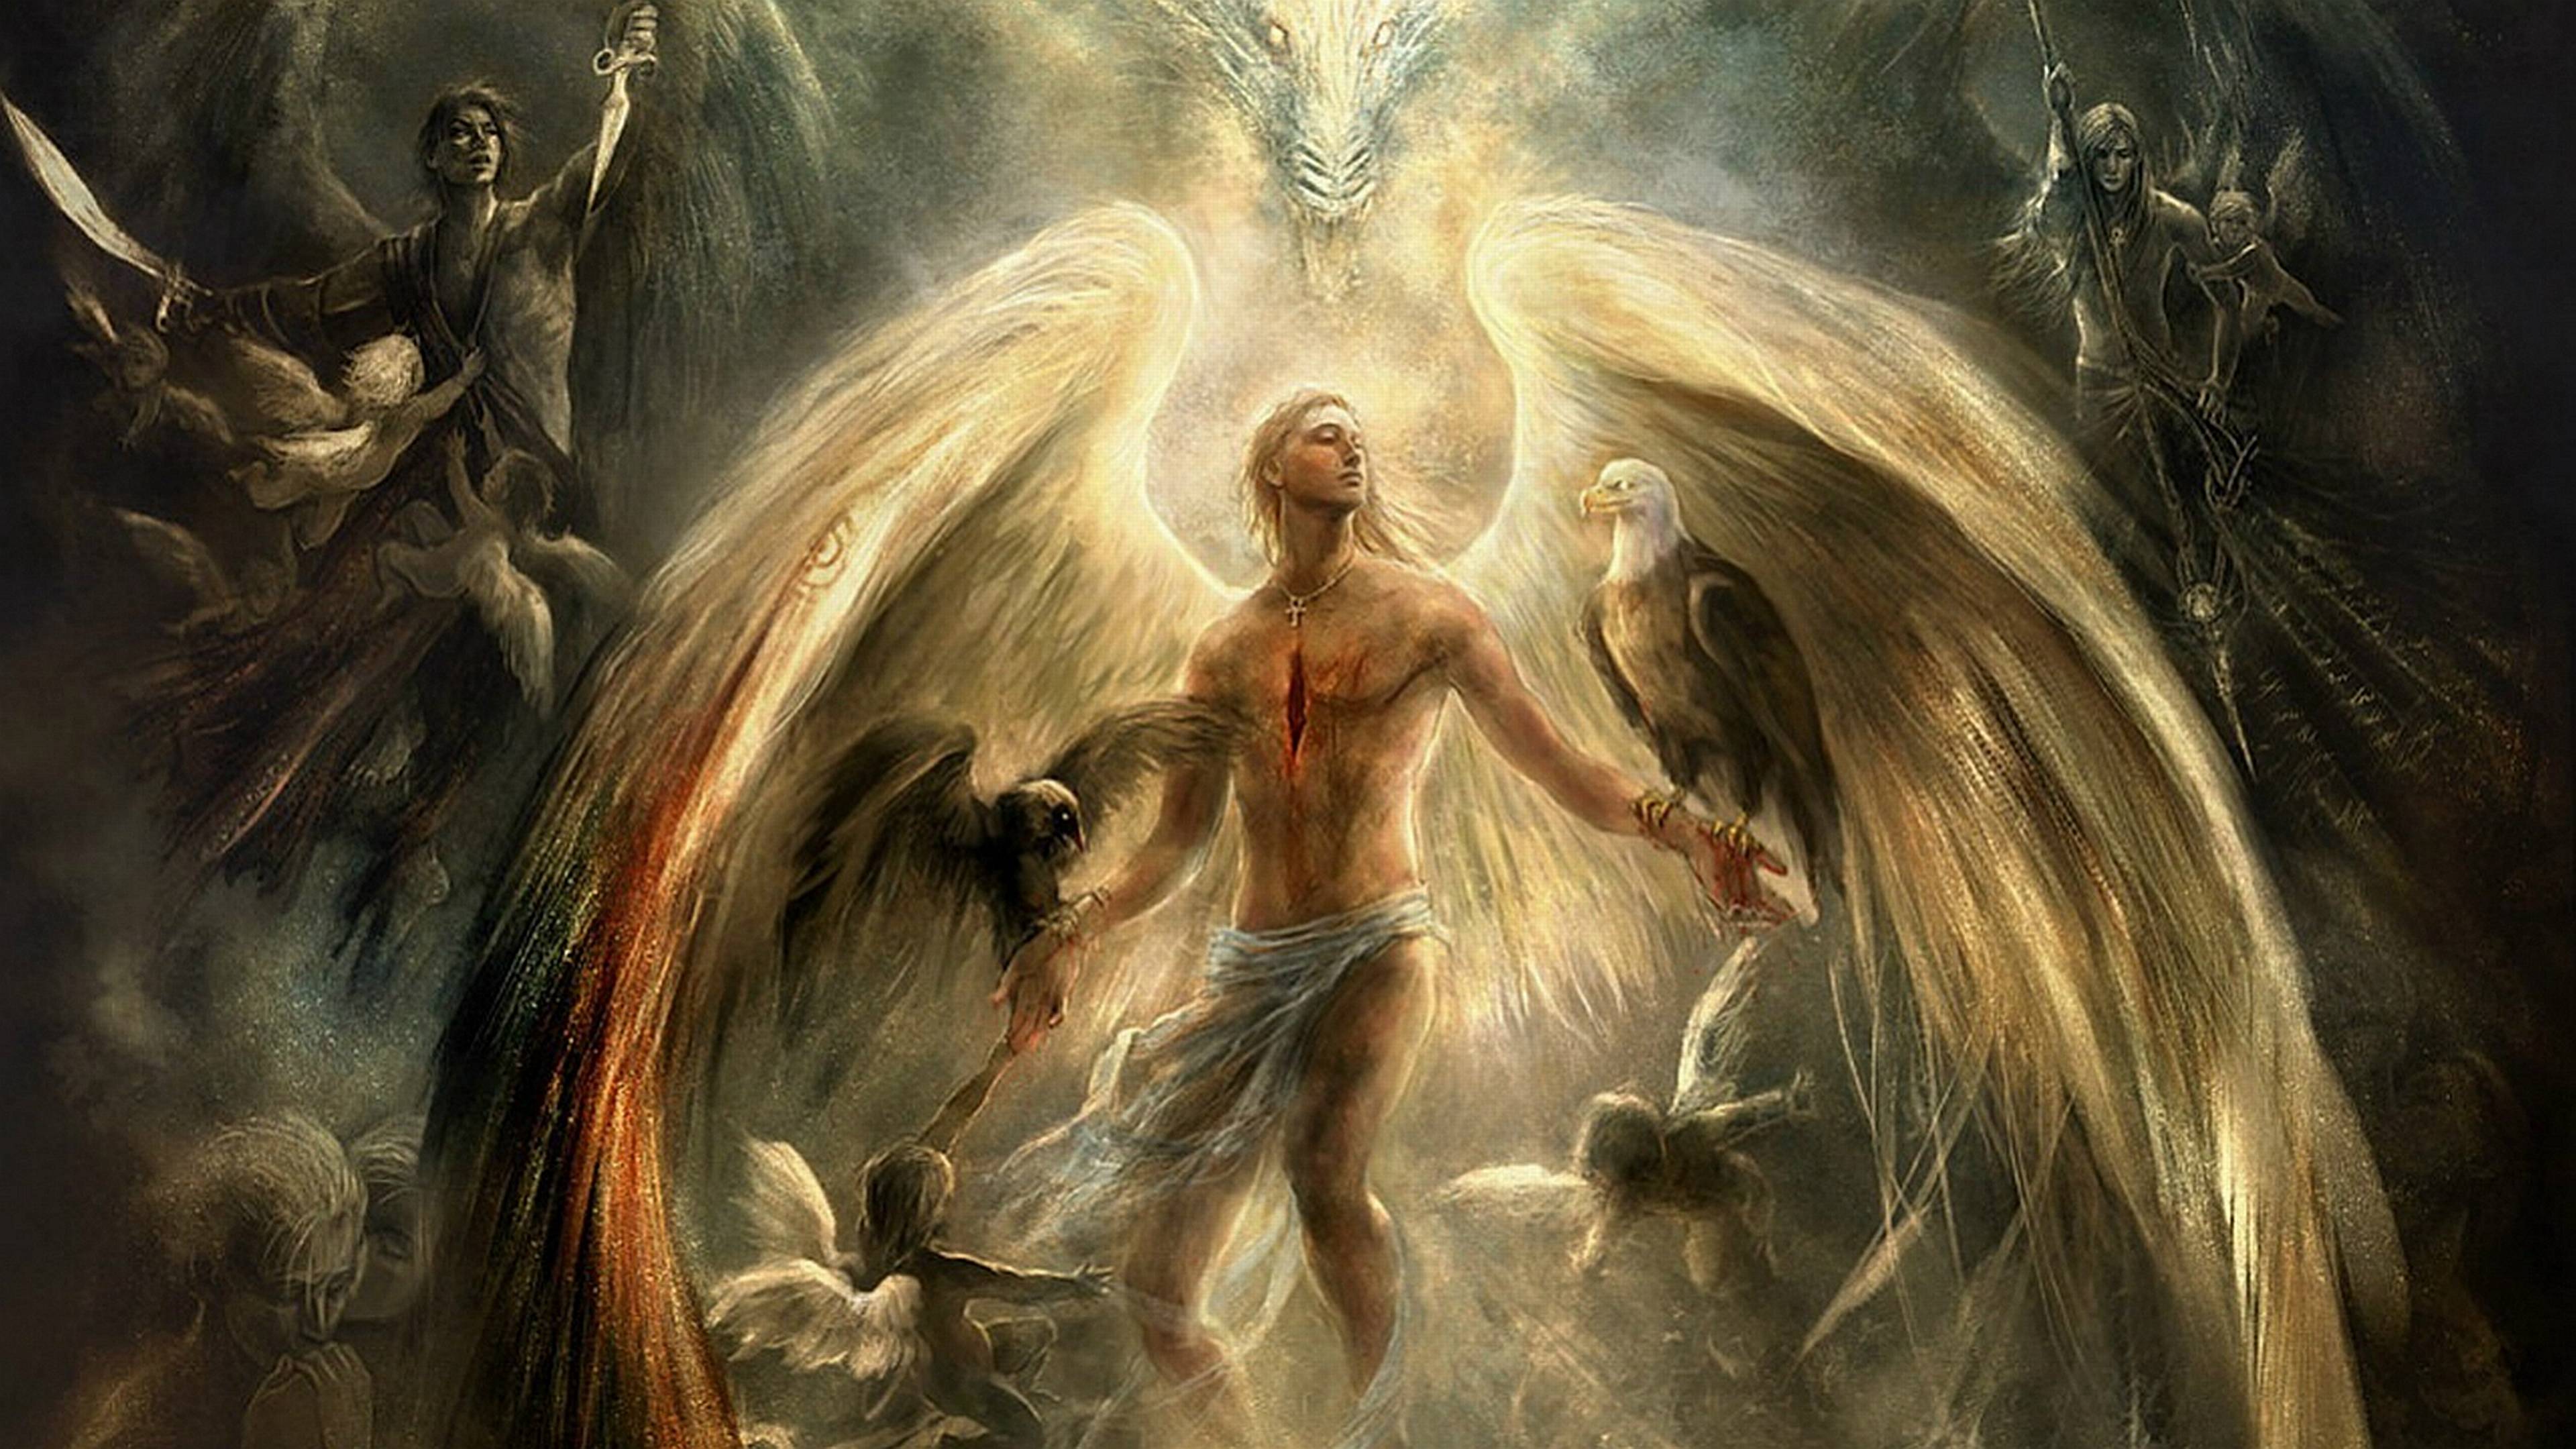 archangel michael prayer wallpaper